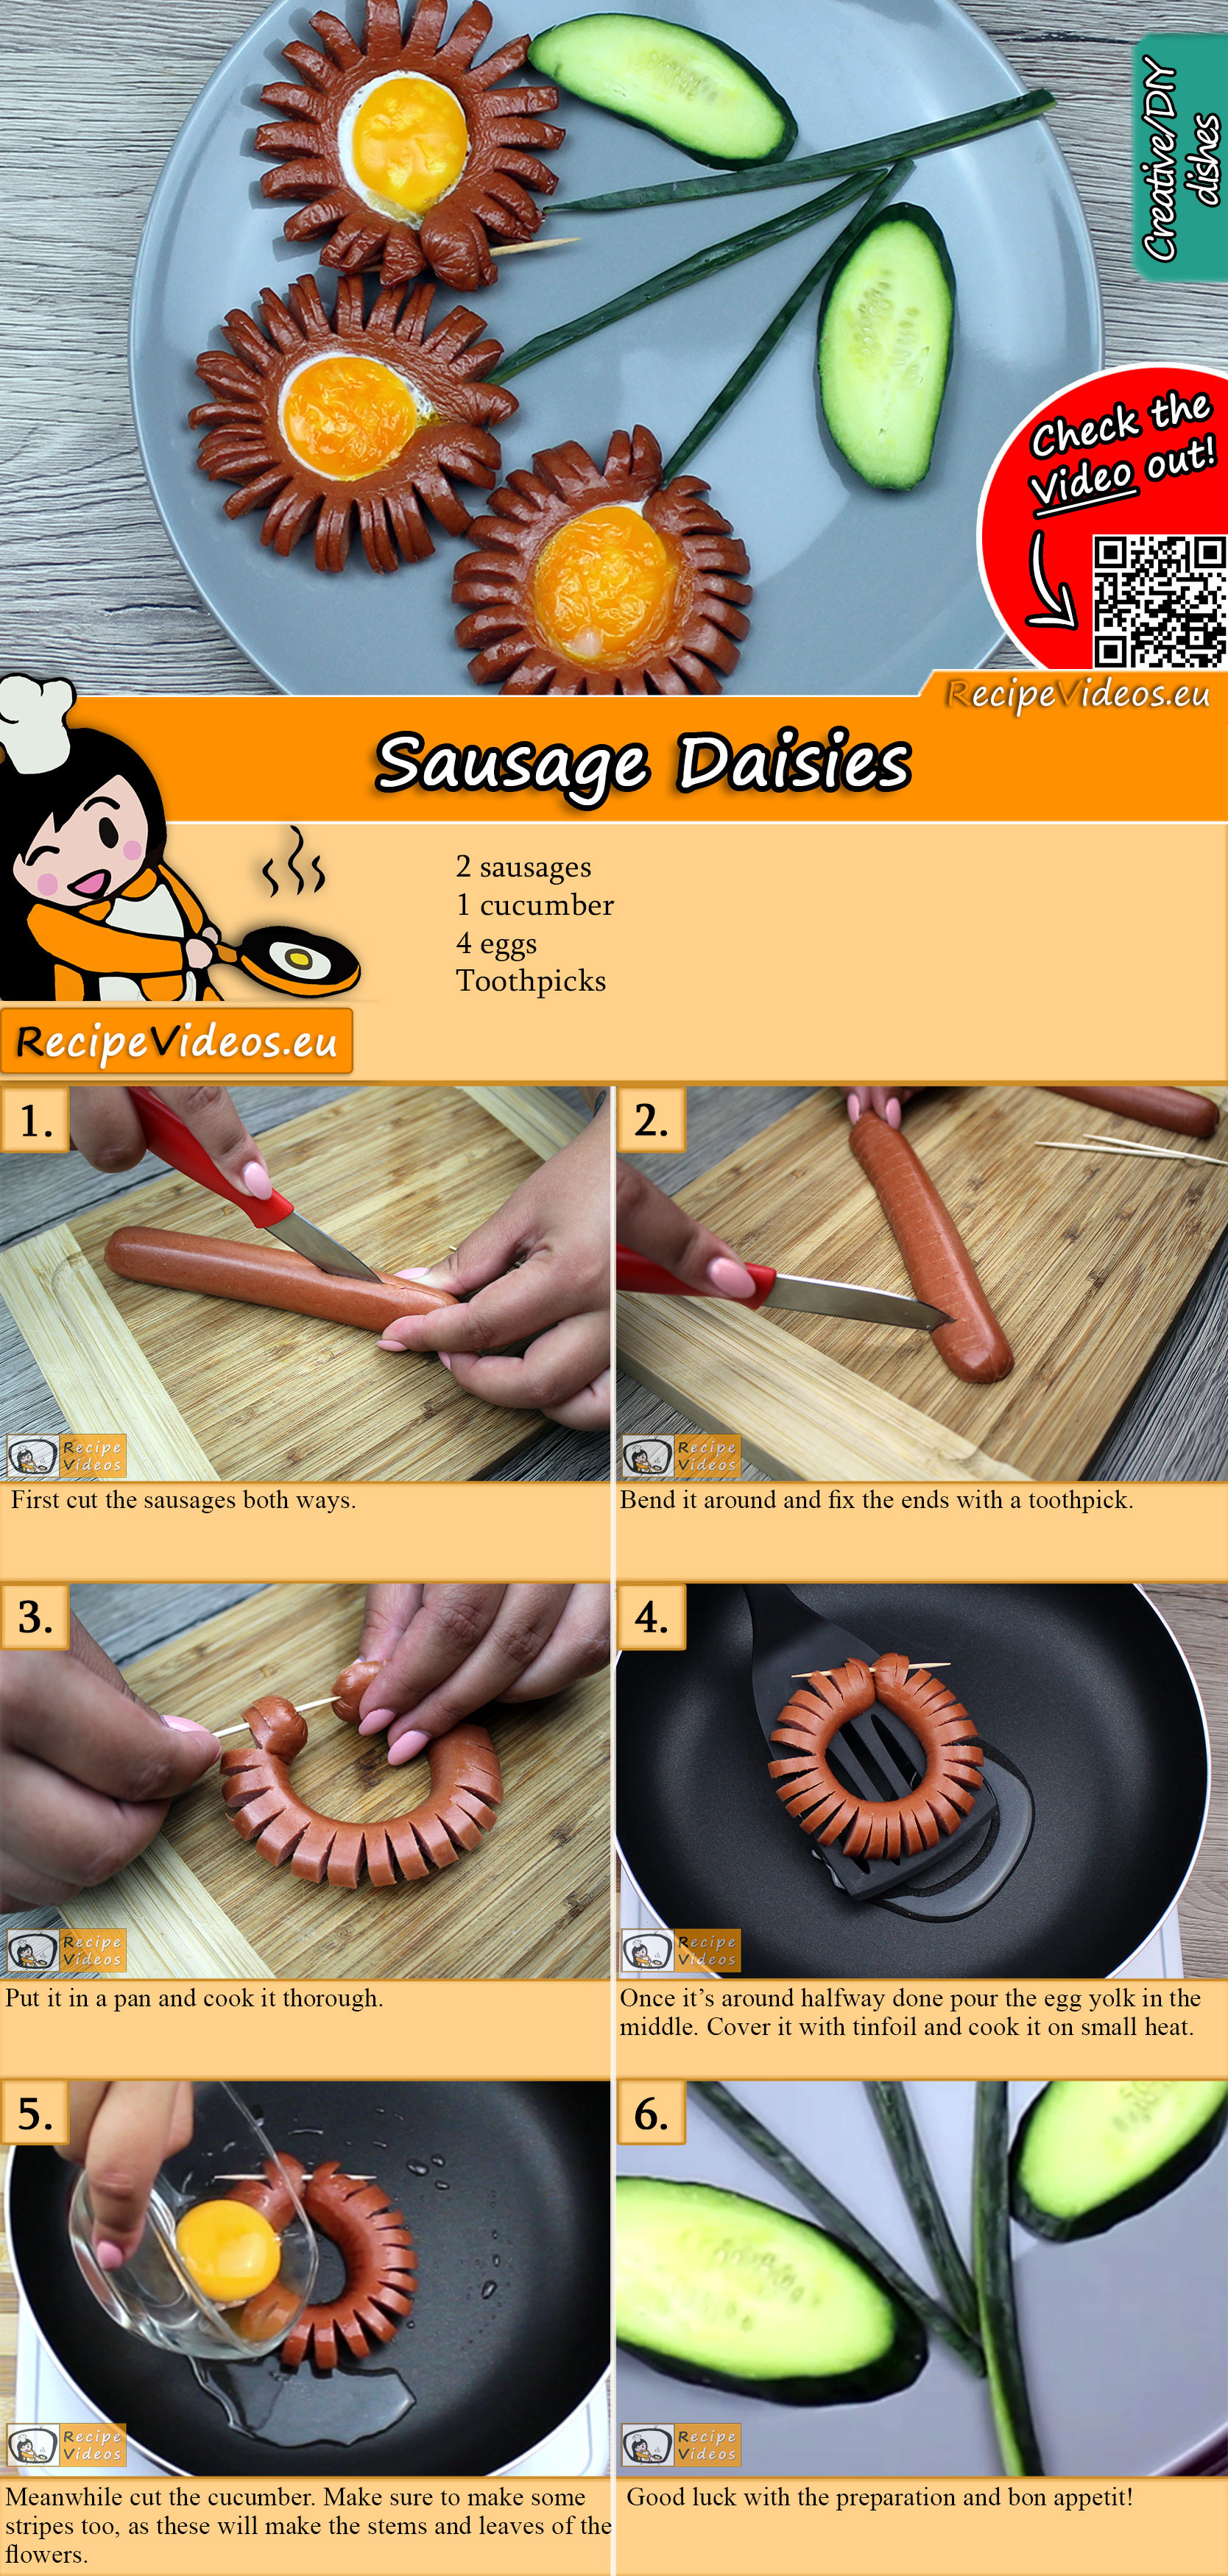 Sausage Daisies recipe with video